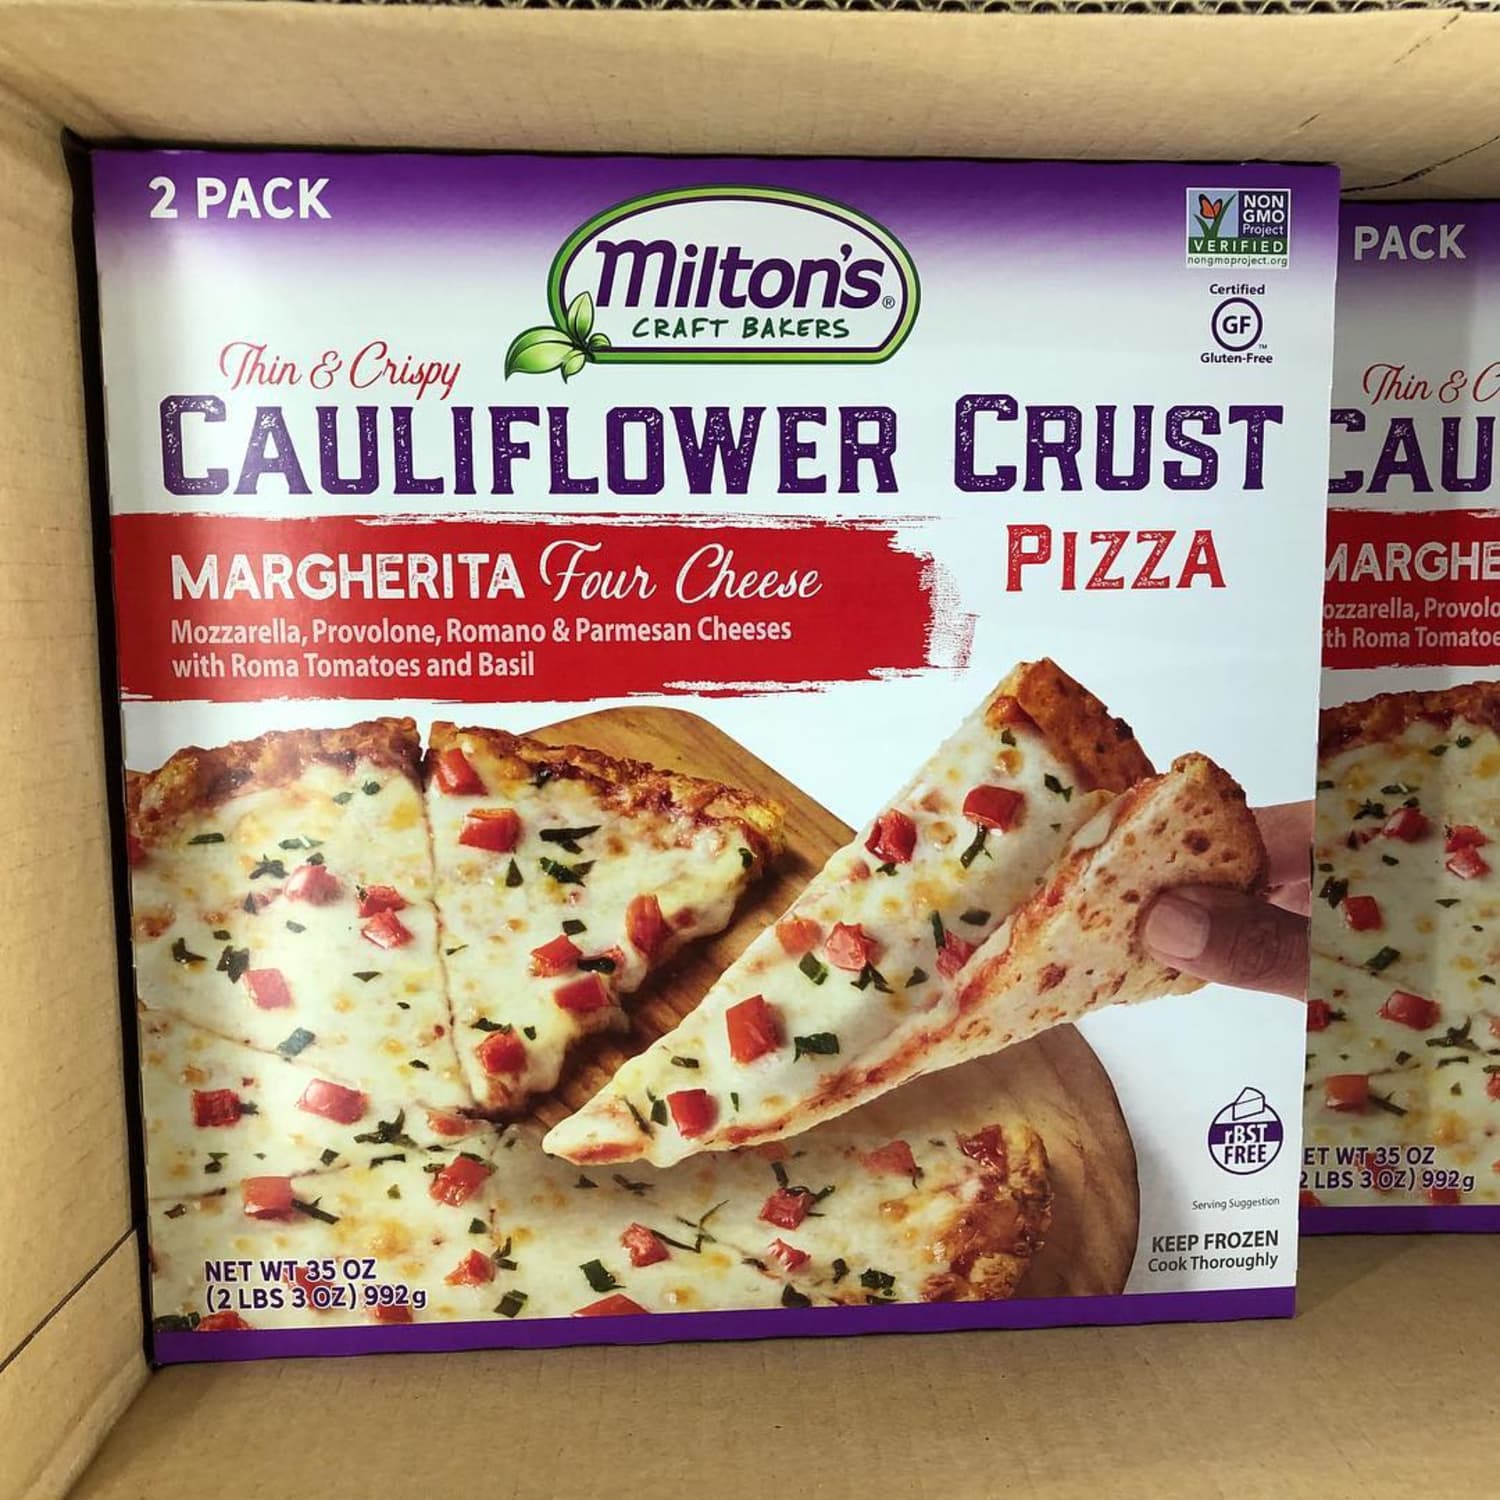 Costco New Cauliflower Crust Gluten Free Pizza Reviews ...